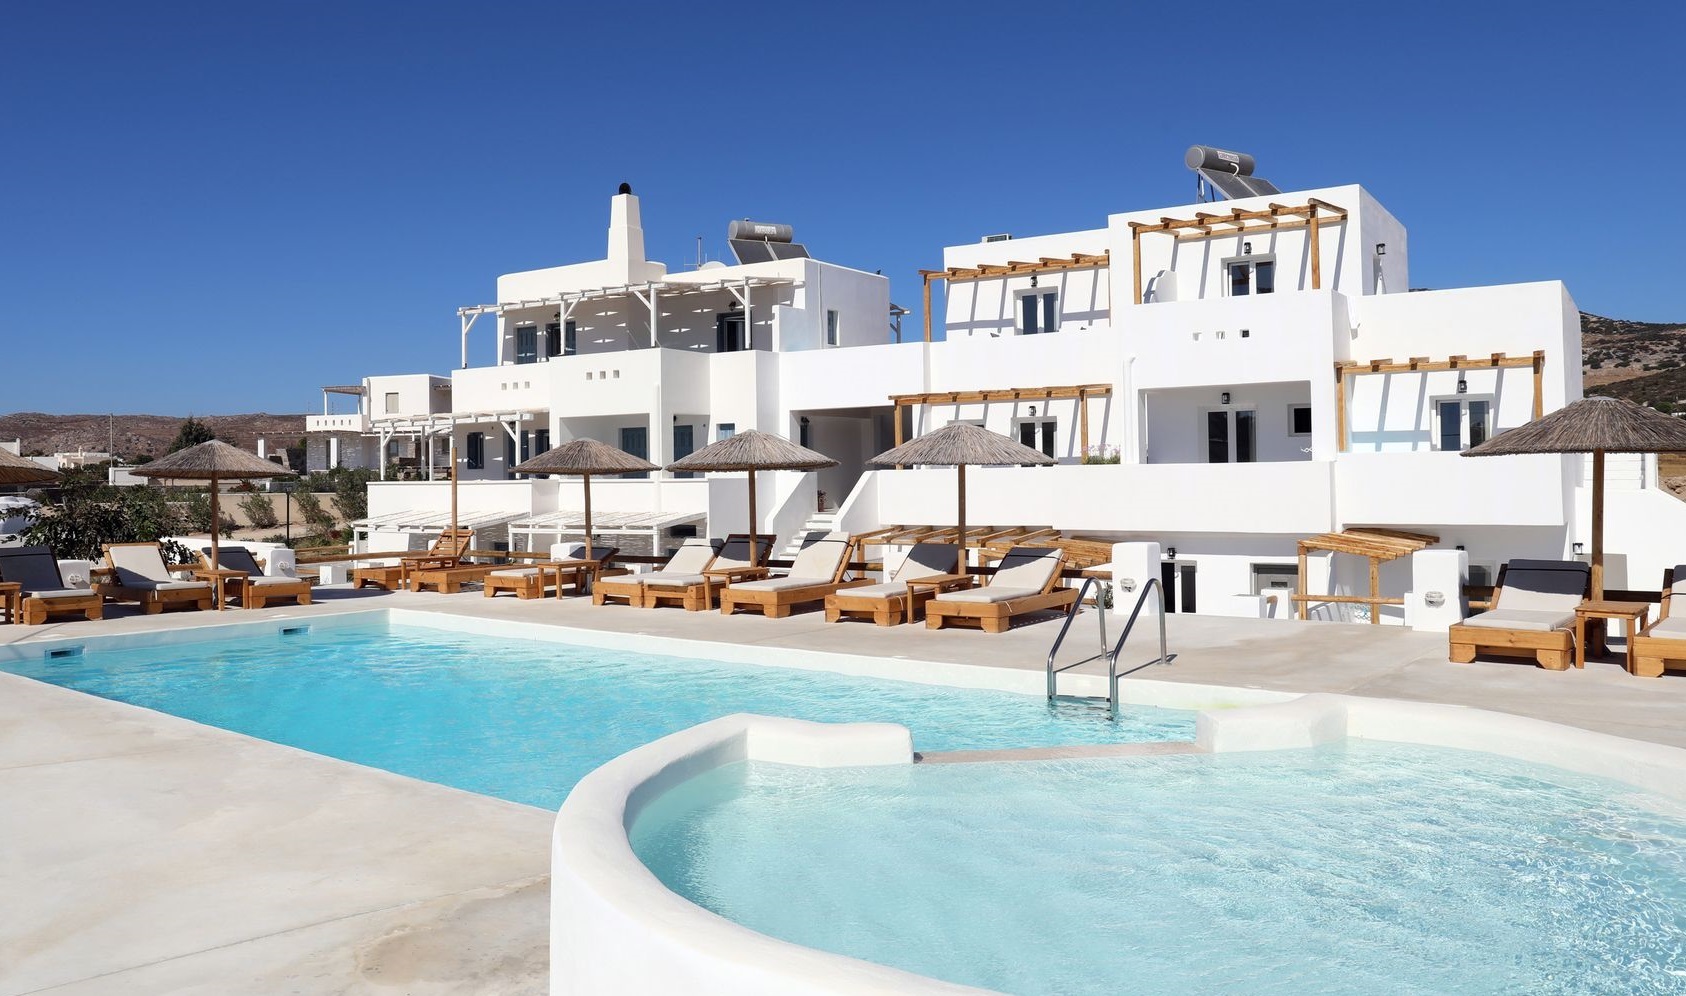 Irida Luxury Apartments - Καστράκι, Νάξος ✦ 2 Ημέρες (1 Διανυκτέρευση) ✦ 2 άτομα ✦ 2 ✦ 09/05/2022 έως 30/09/2022 ✦ Κοντά σε παραλία!